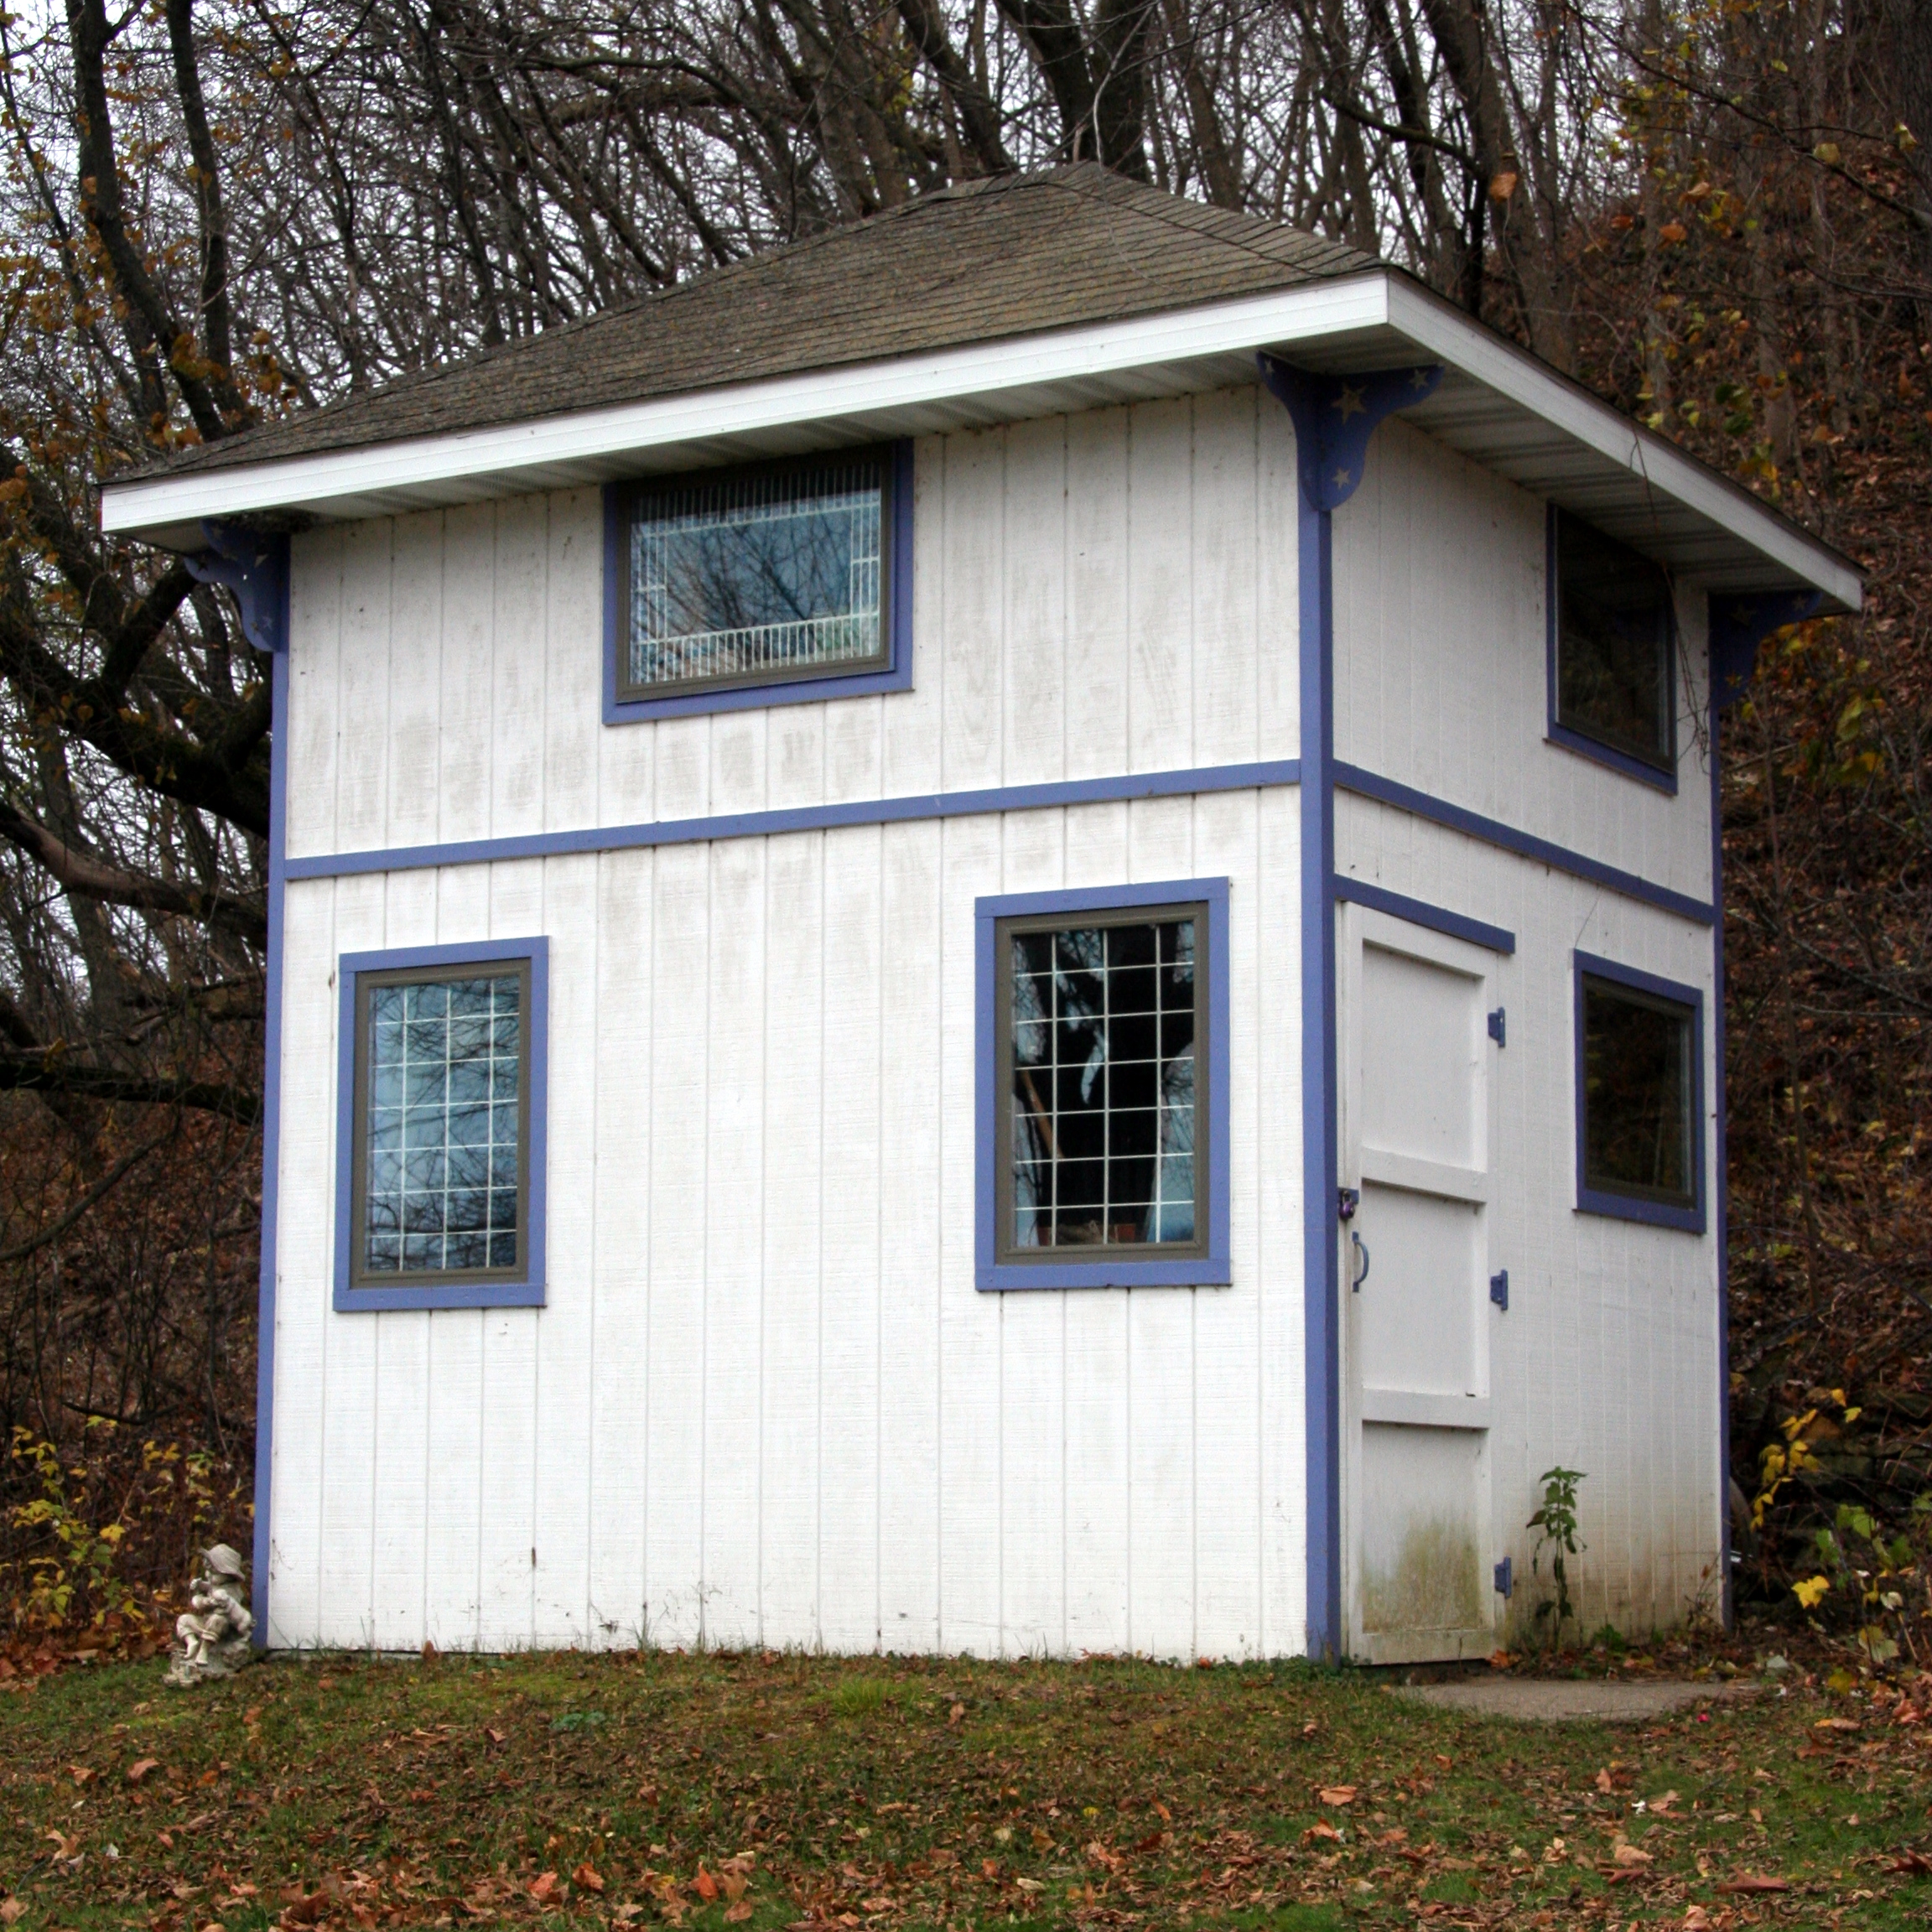 Larger domestic sheds